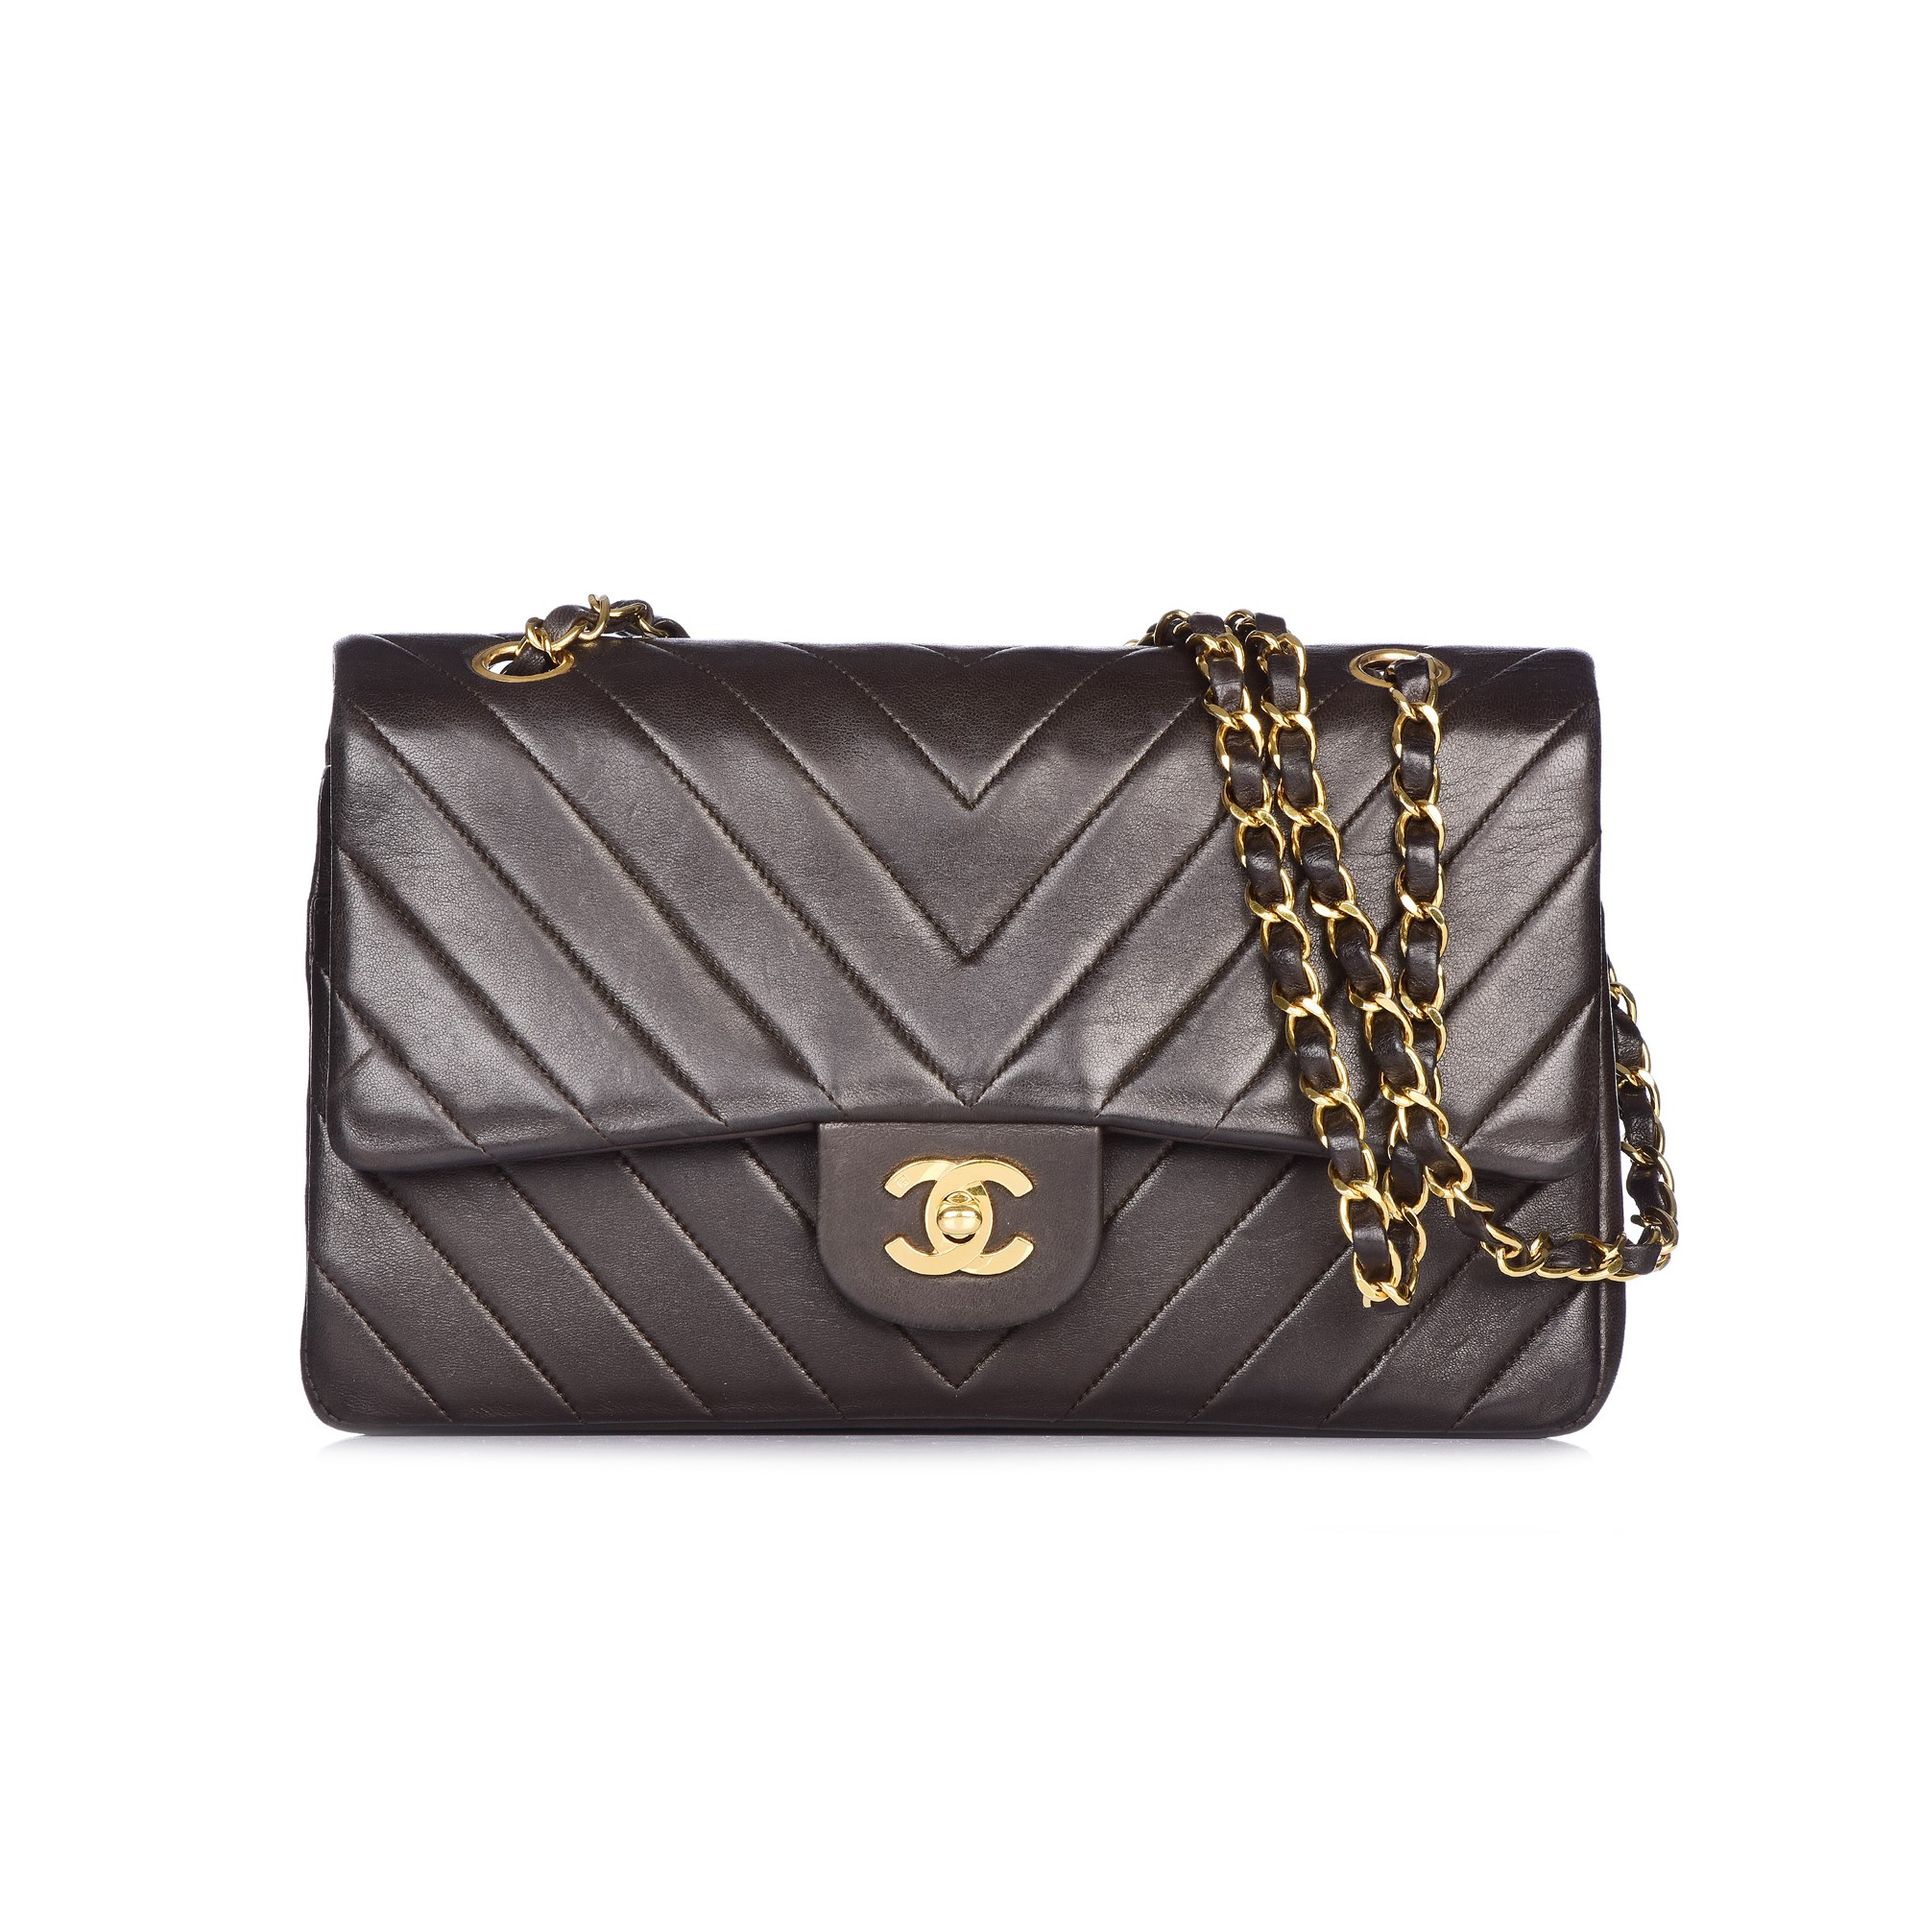 CHANEL Chanel Timeless vintage dark brown with gold hardware and adjustable shou&hellip;